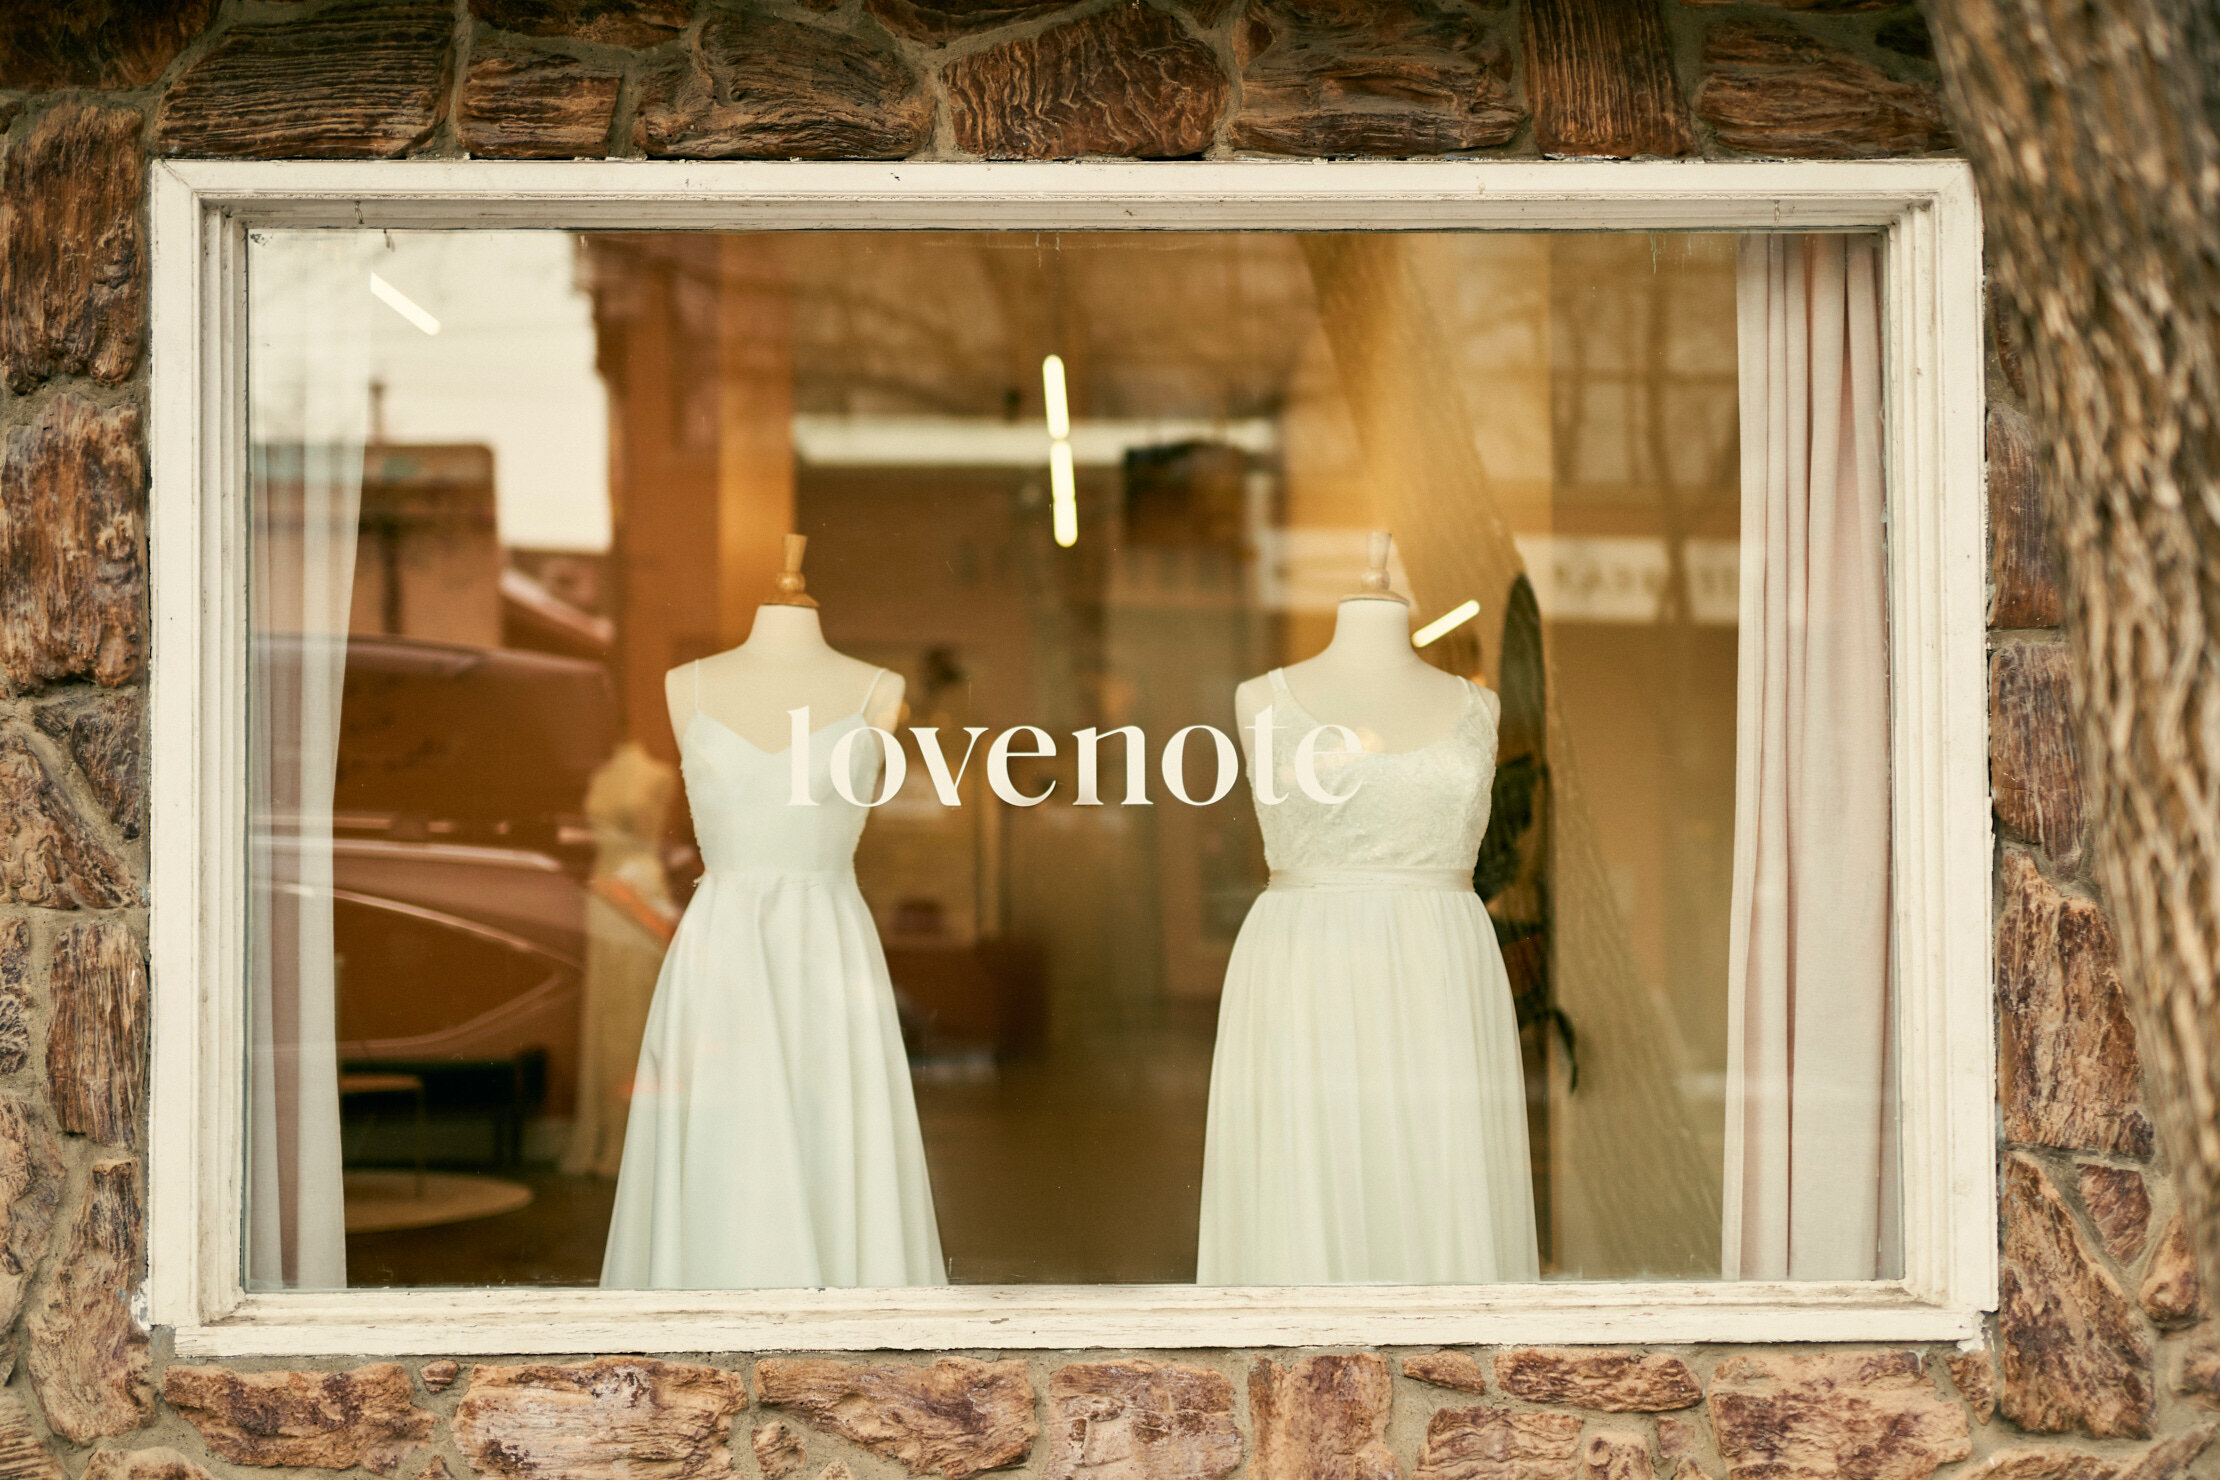 Florence – Lovenote Bride